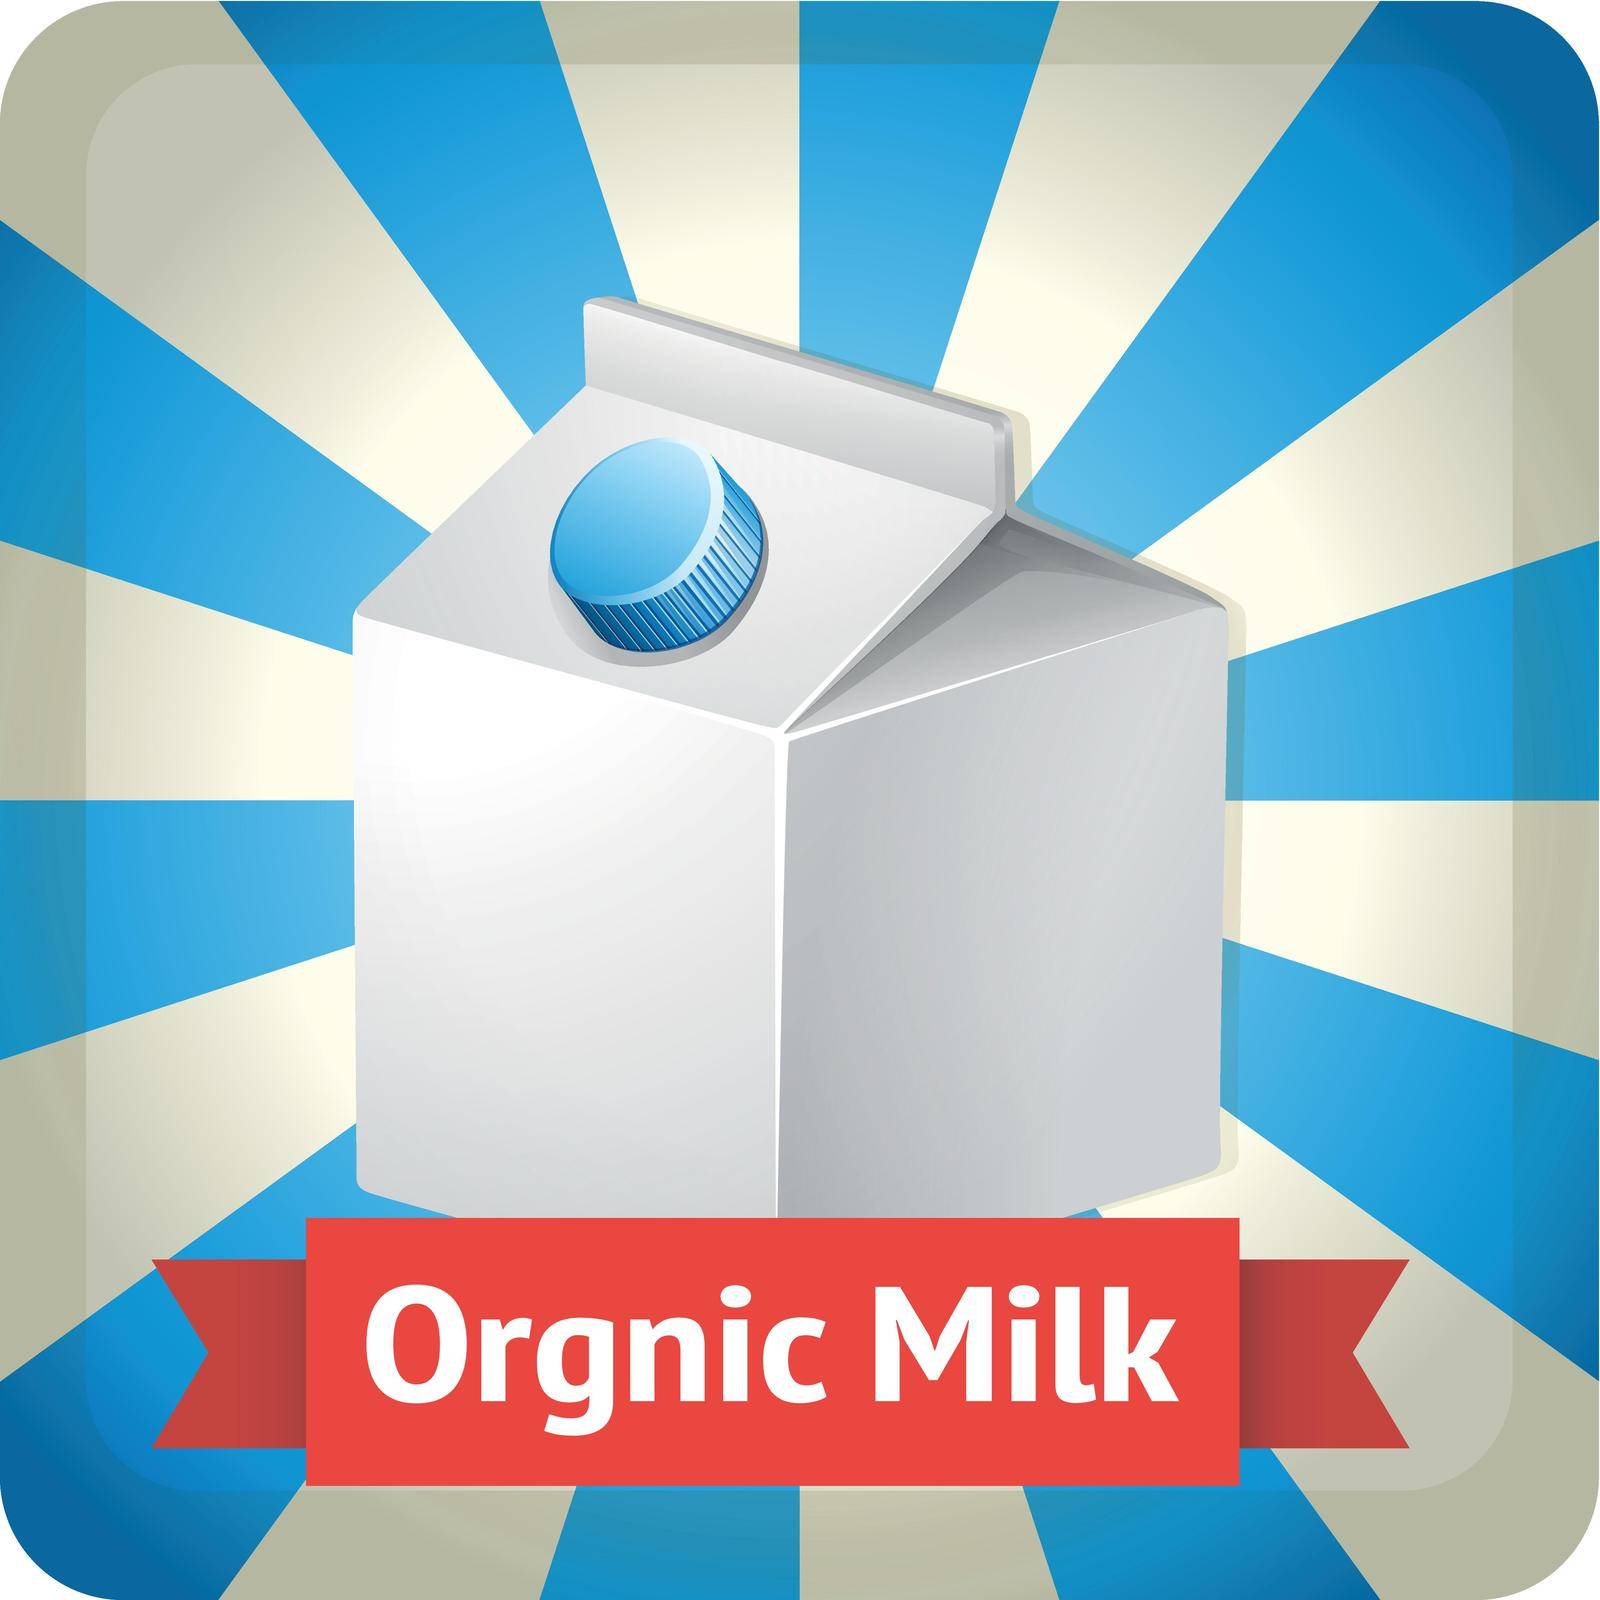 Carton of milk with a banner of Orga	nic Milk